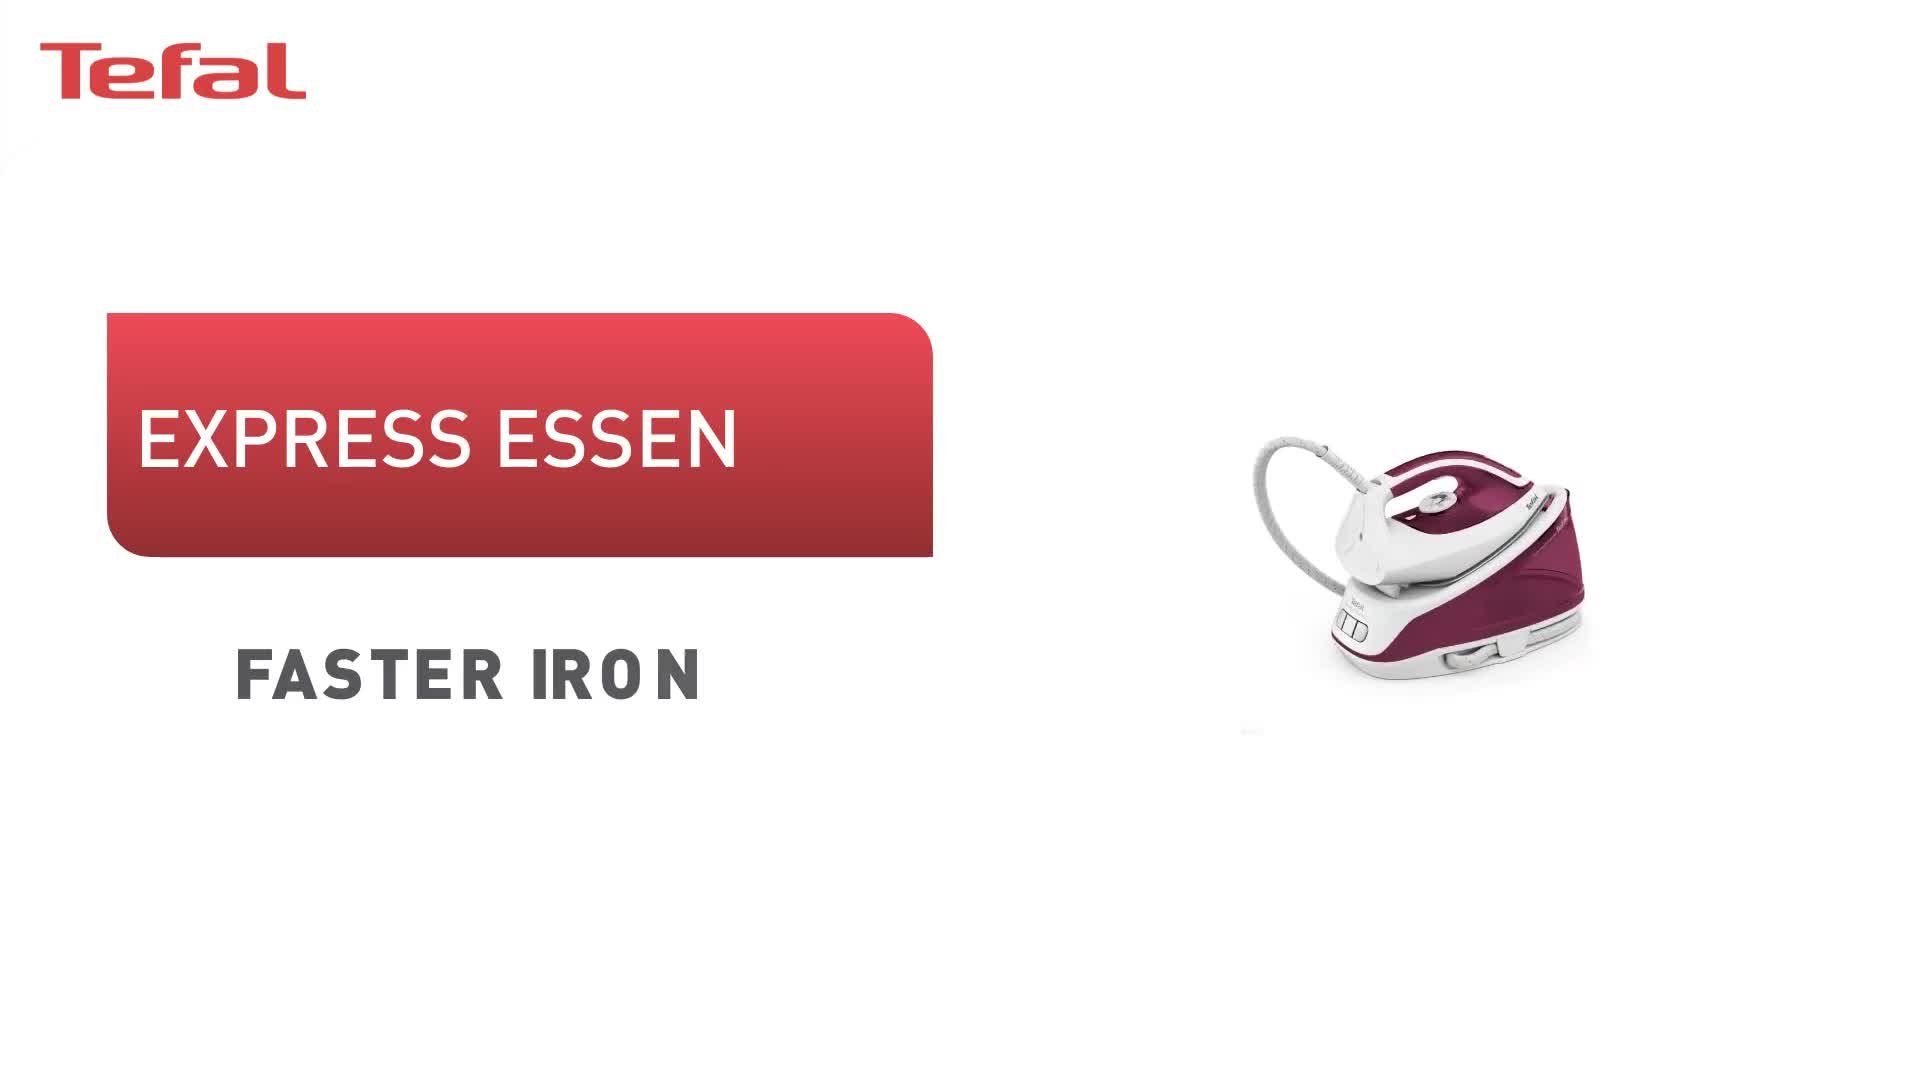 Essential SV6110 Iron | Buy Argos Tefal | Irons Express Steam Generator